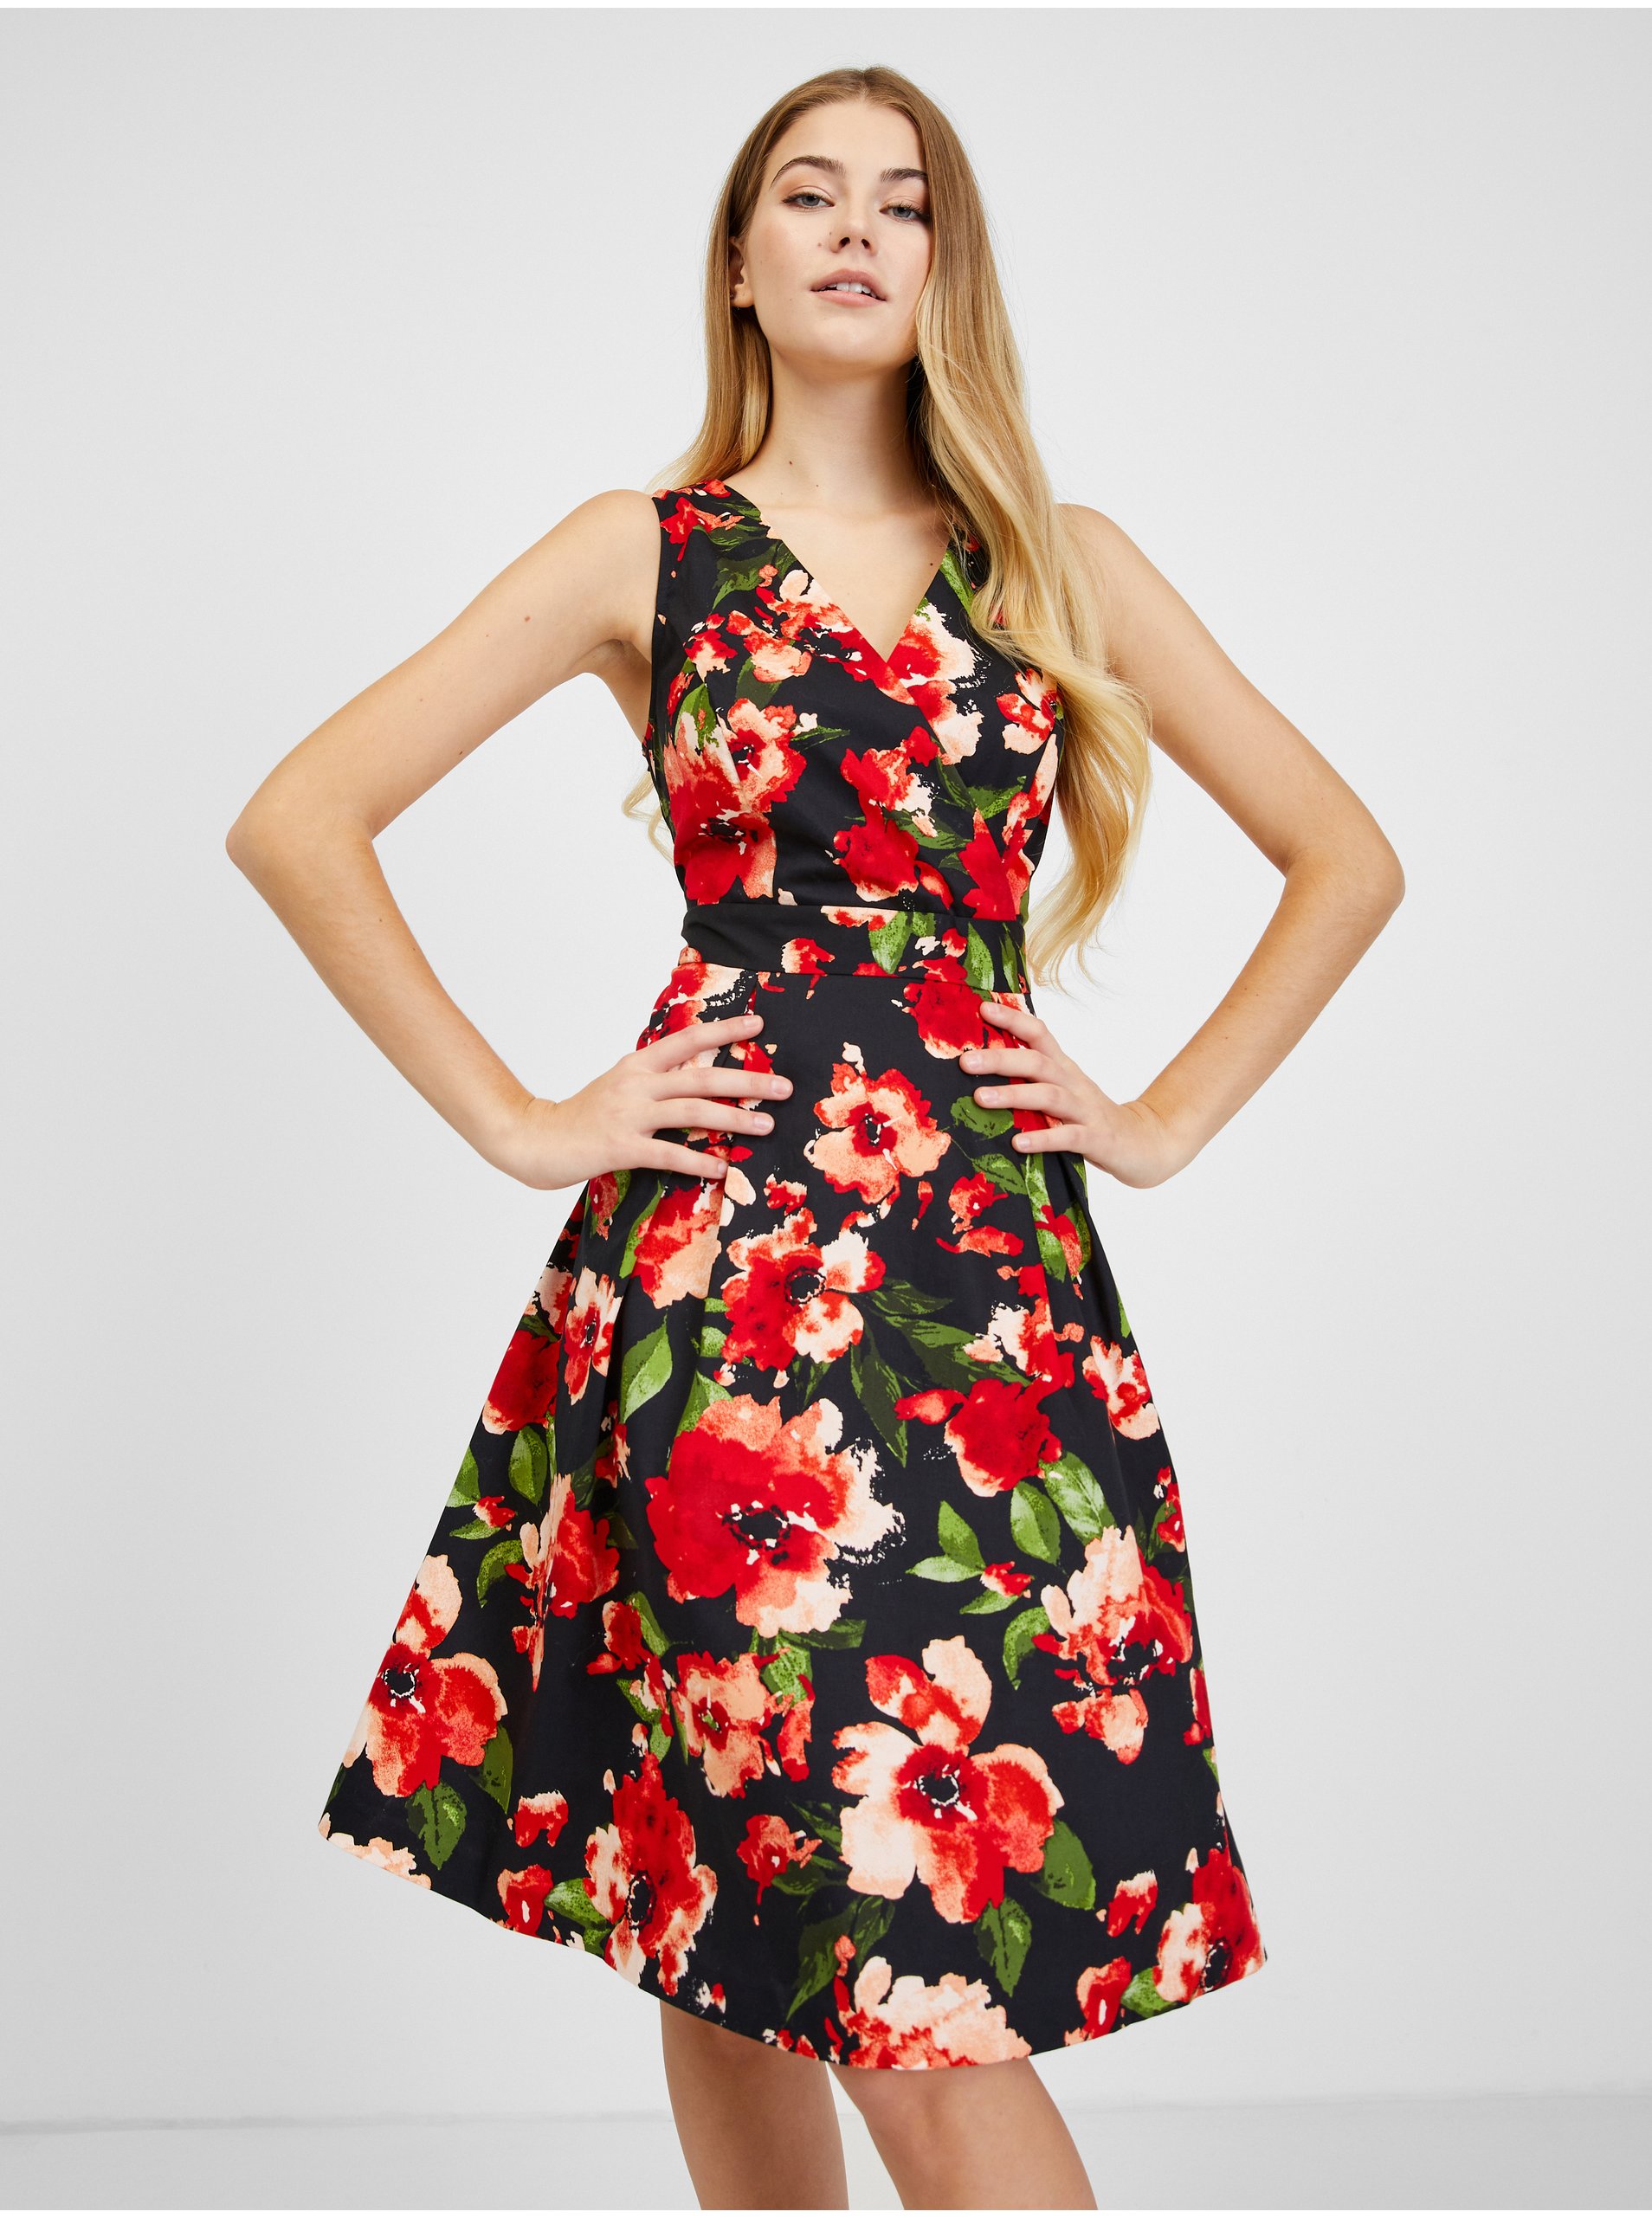 Orsay Red & Black Women's Floral Dress - Women